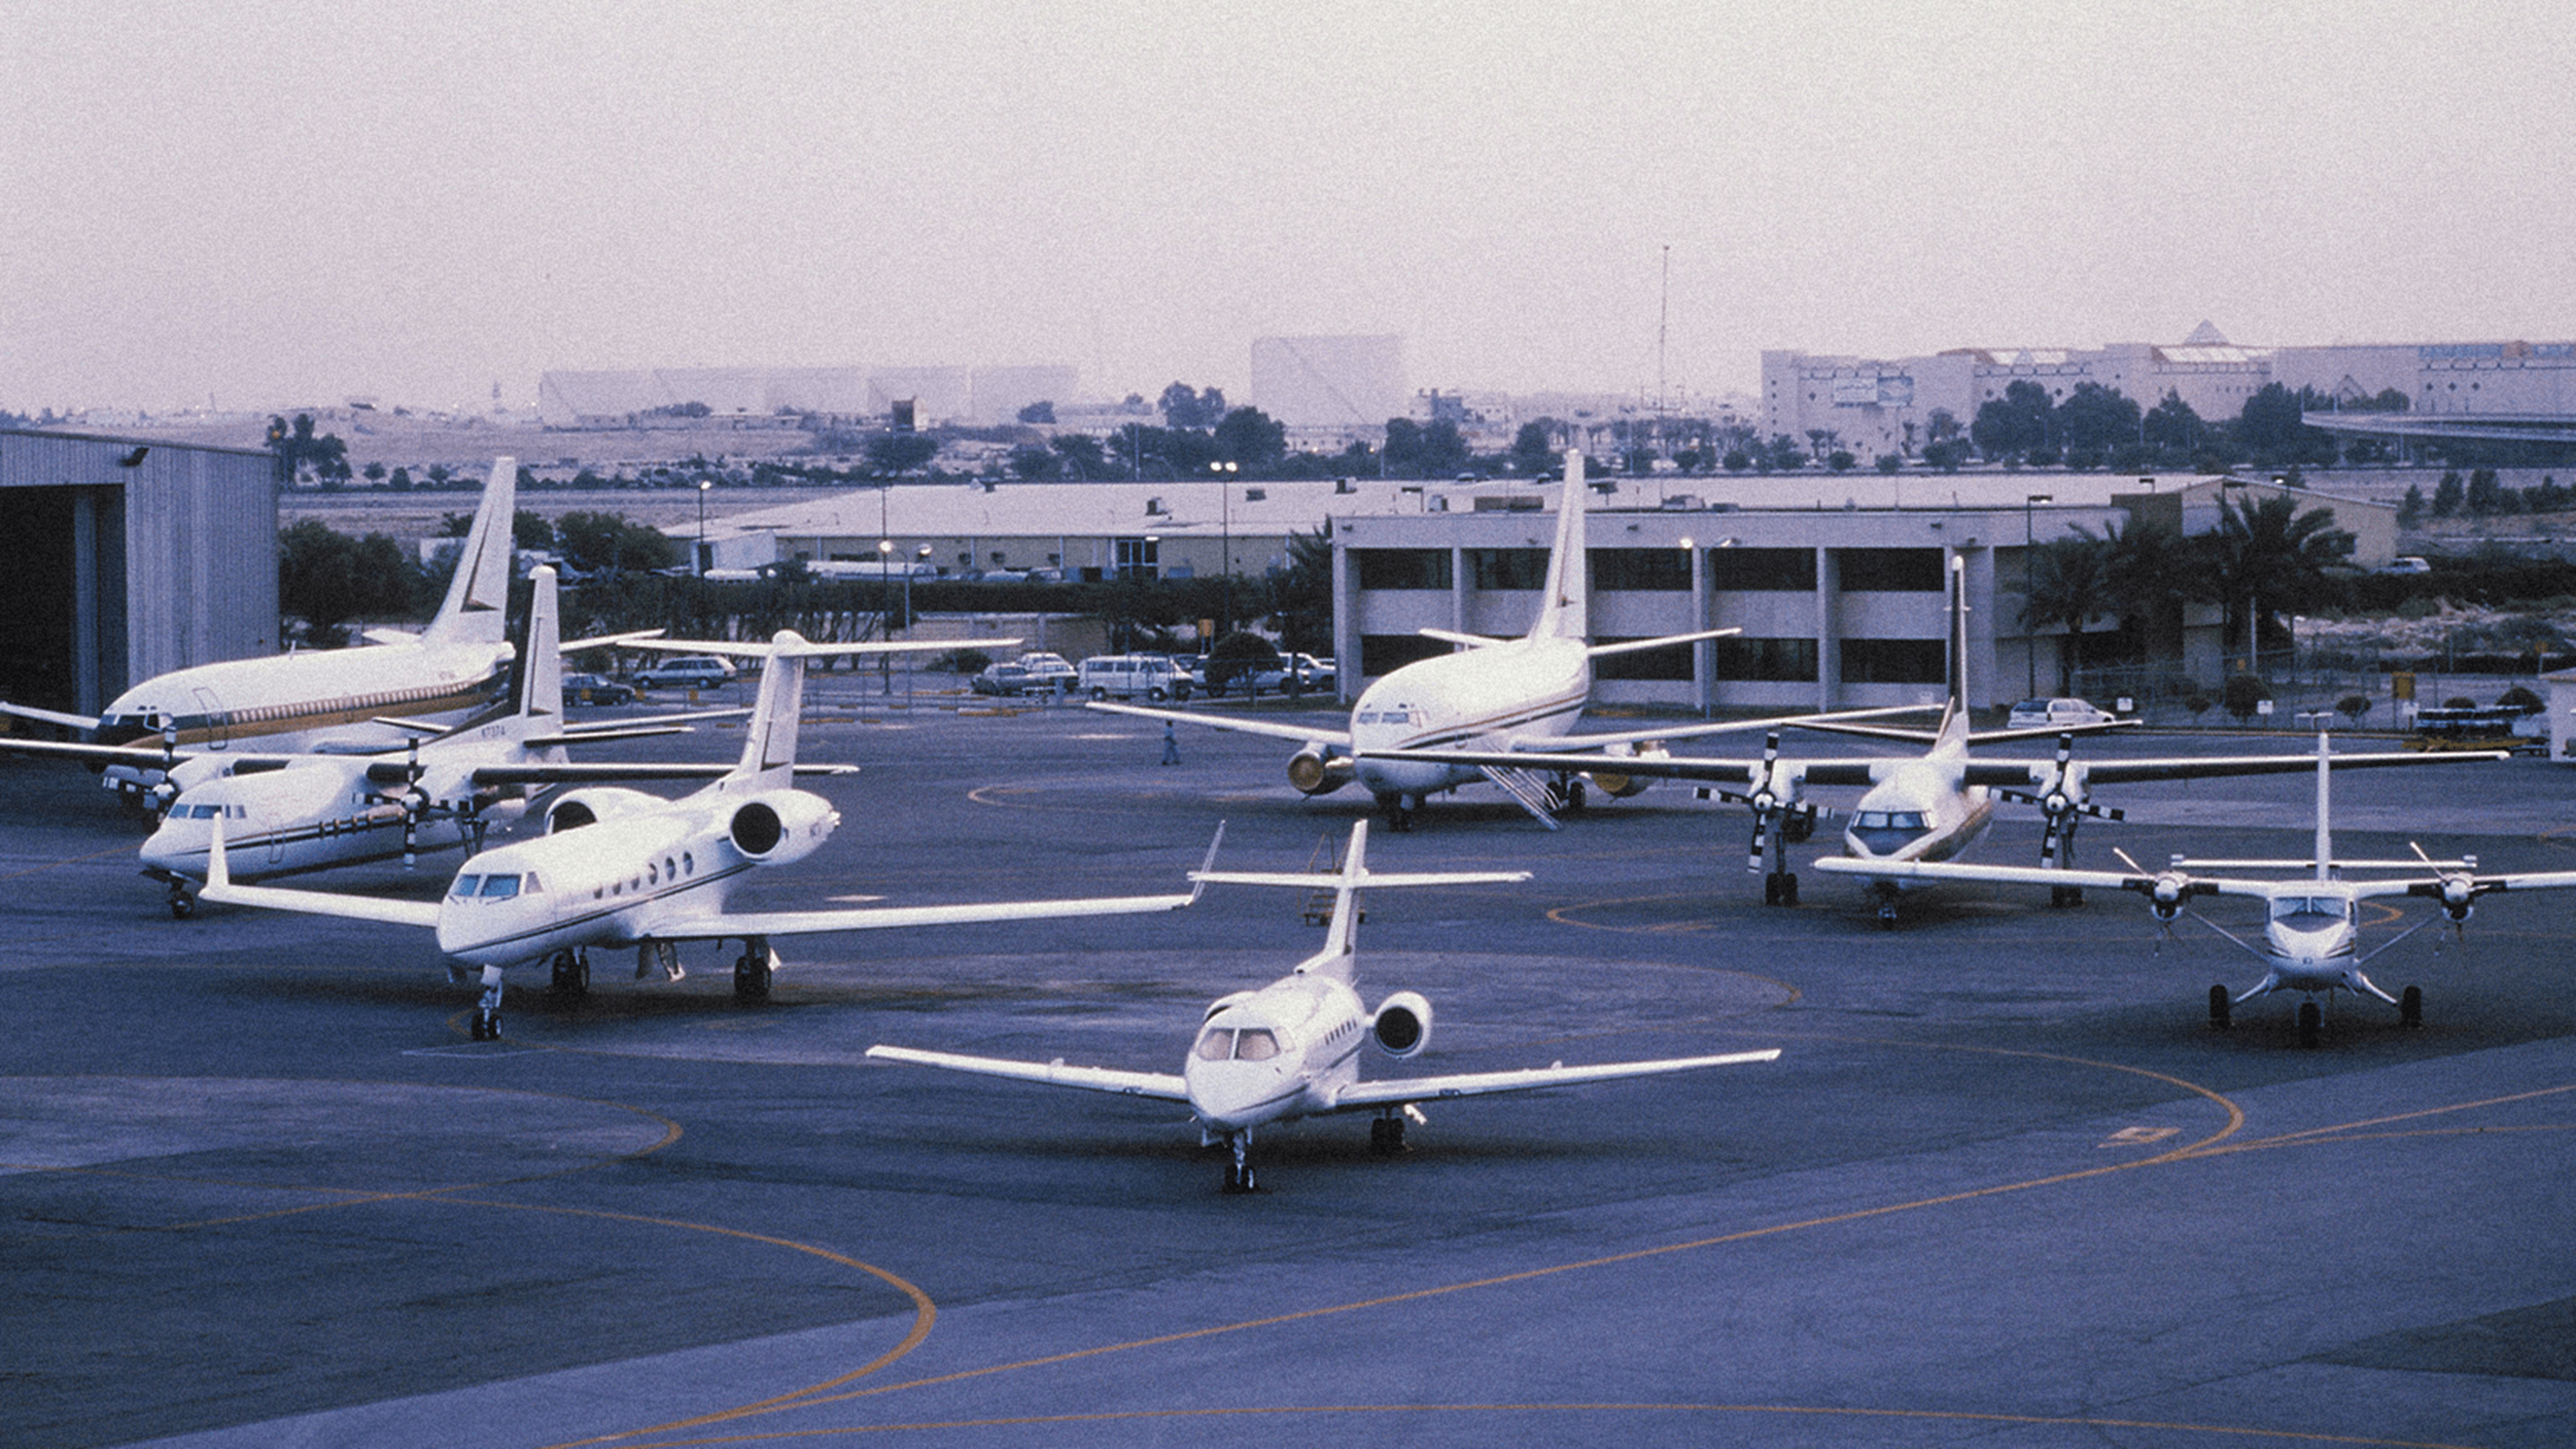 Several Mukamalah airplanes portrayed at the Saudi Arabian airport airstrip